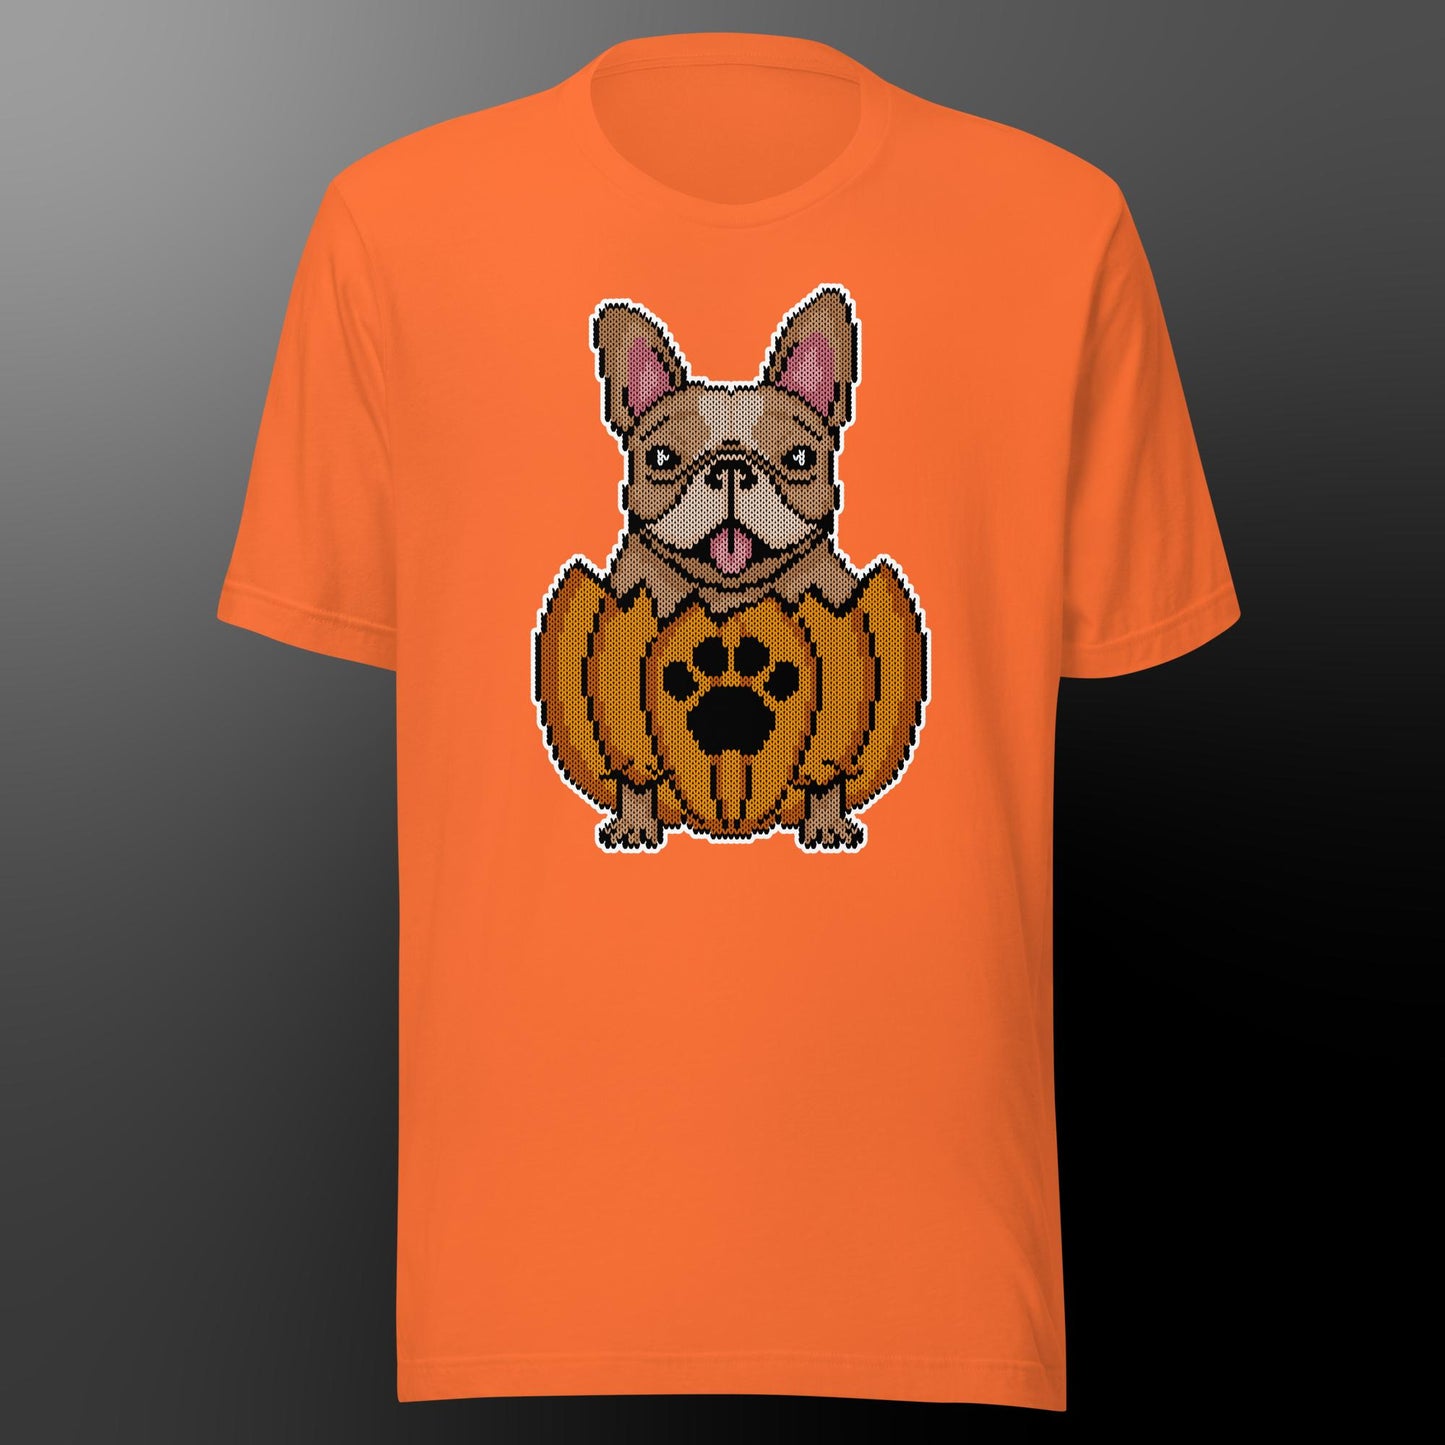 Halloween Shirt mit Frenchie (Fellfarbe fawn pied)